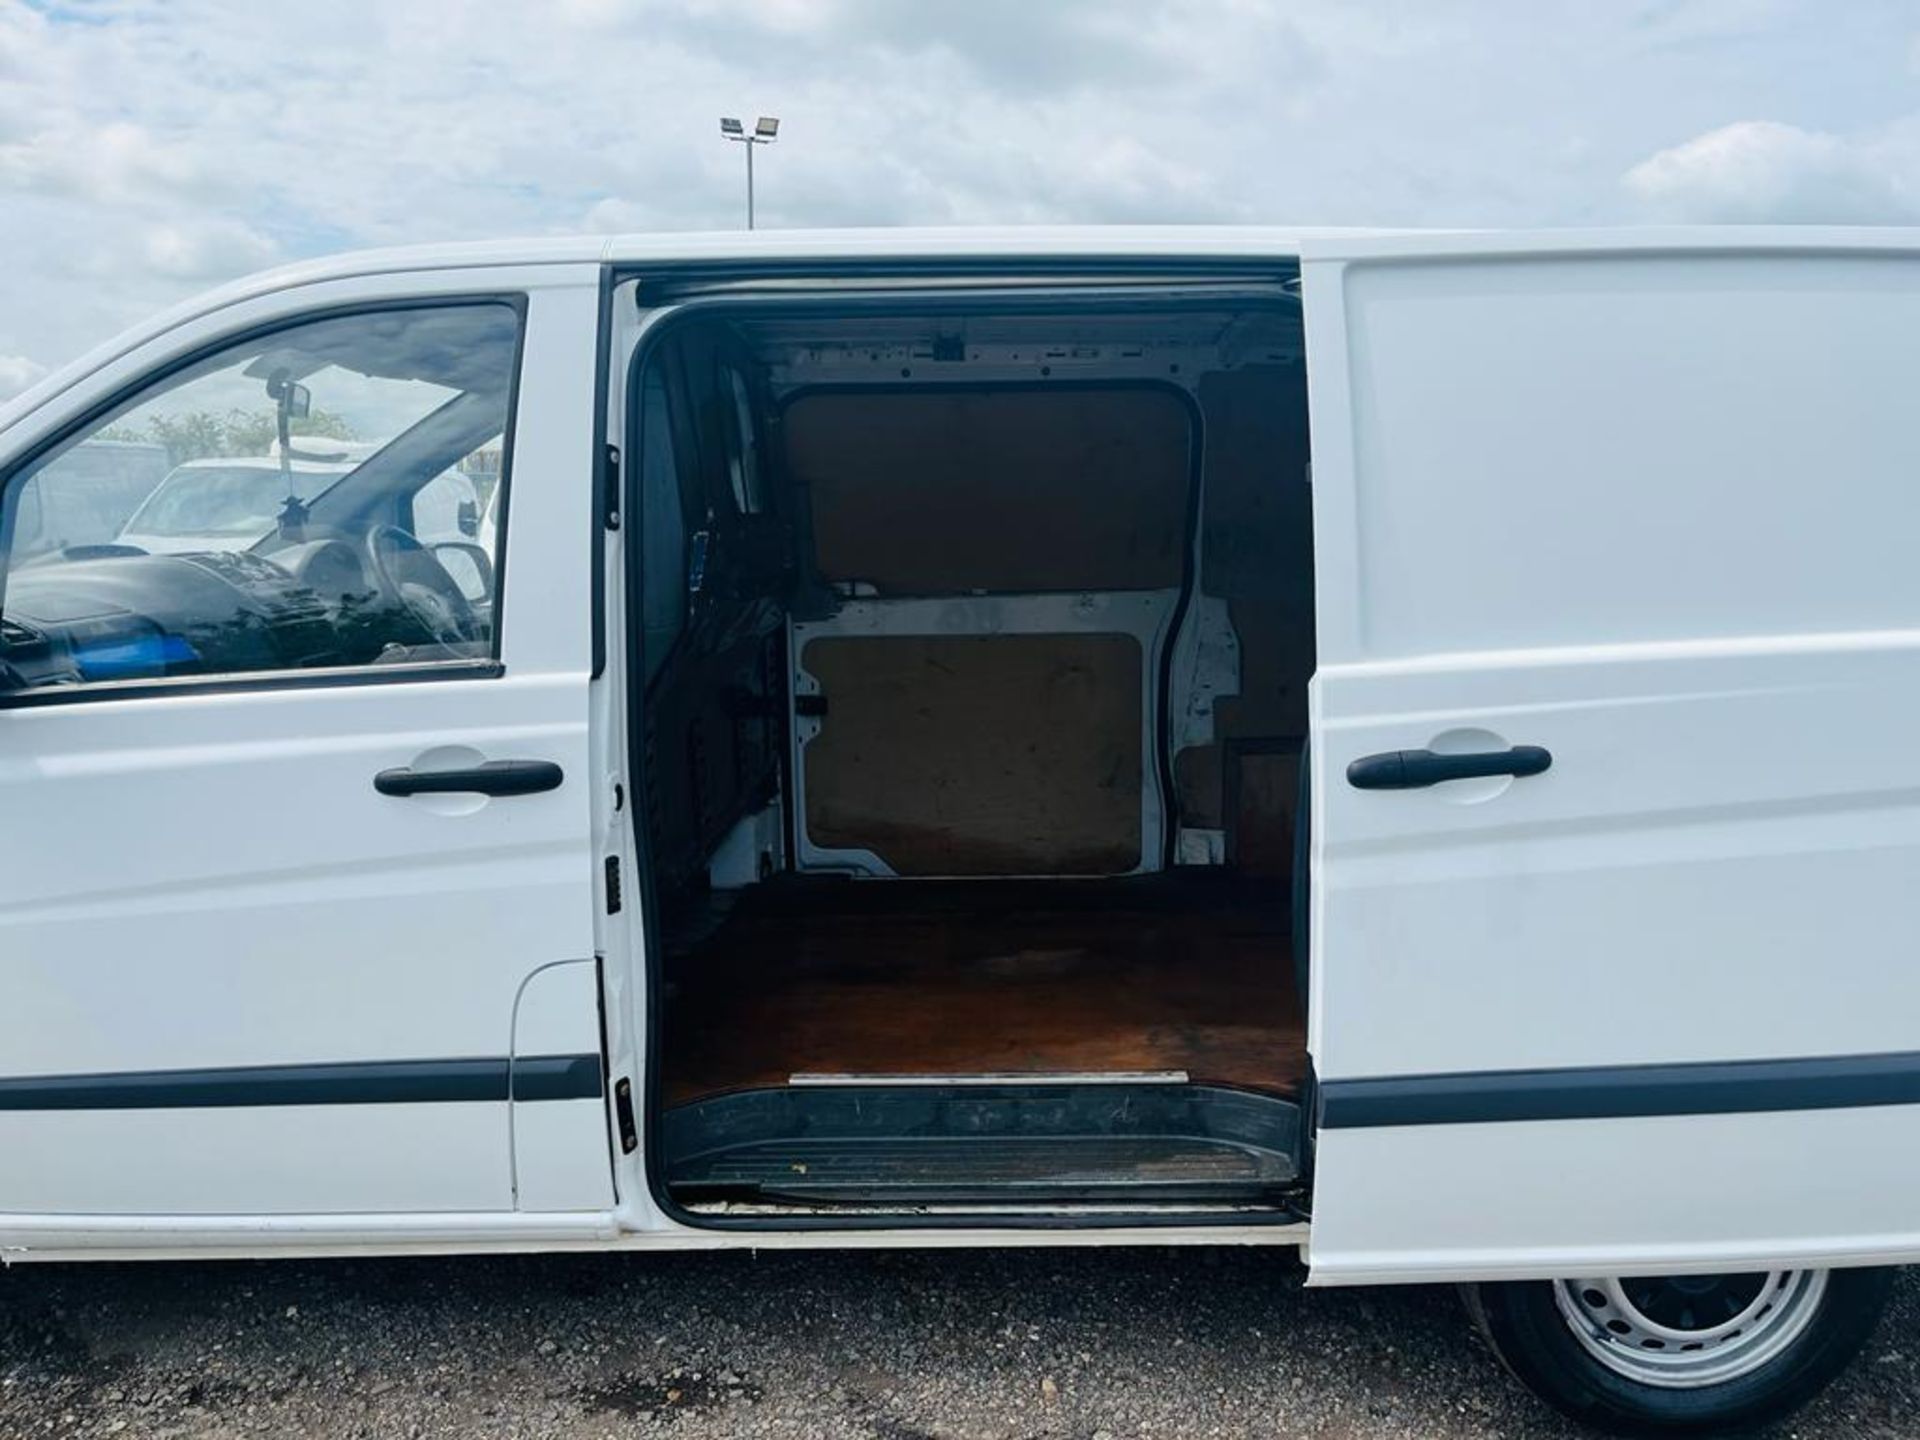 ** ON SALE ** Mercedes Benz Vito 2.1 110 CDI Long Wheel Base 2012 '12 Reg' A/C - Panel Van - Image 6 of 25